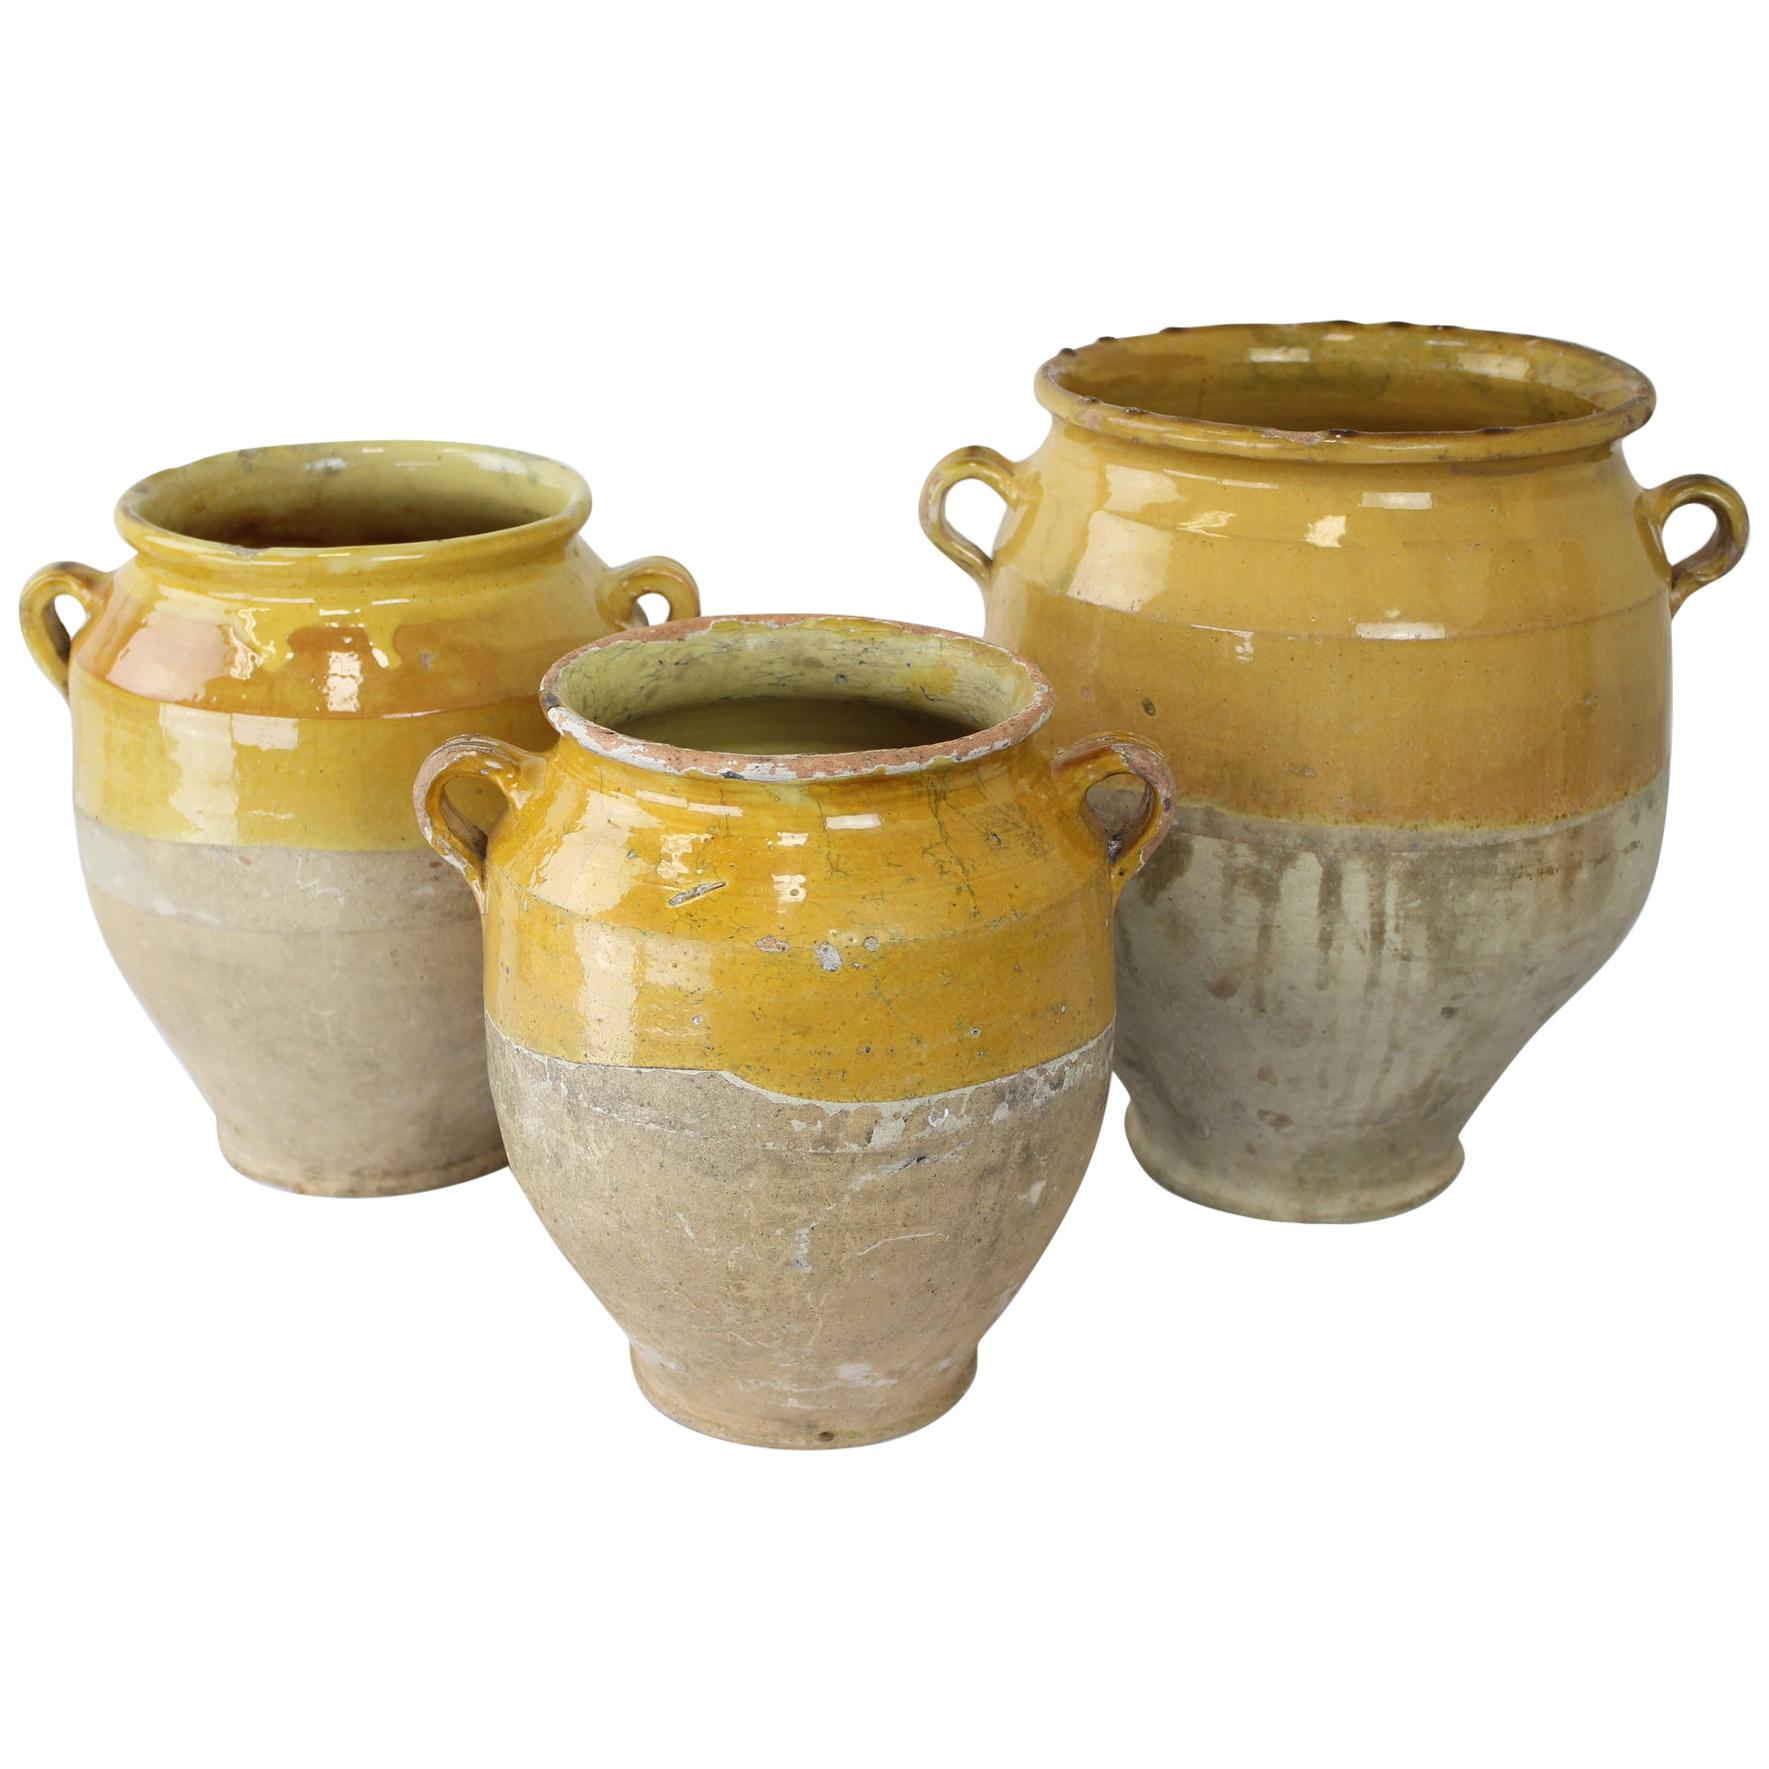 Three Antique French Confit Pots